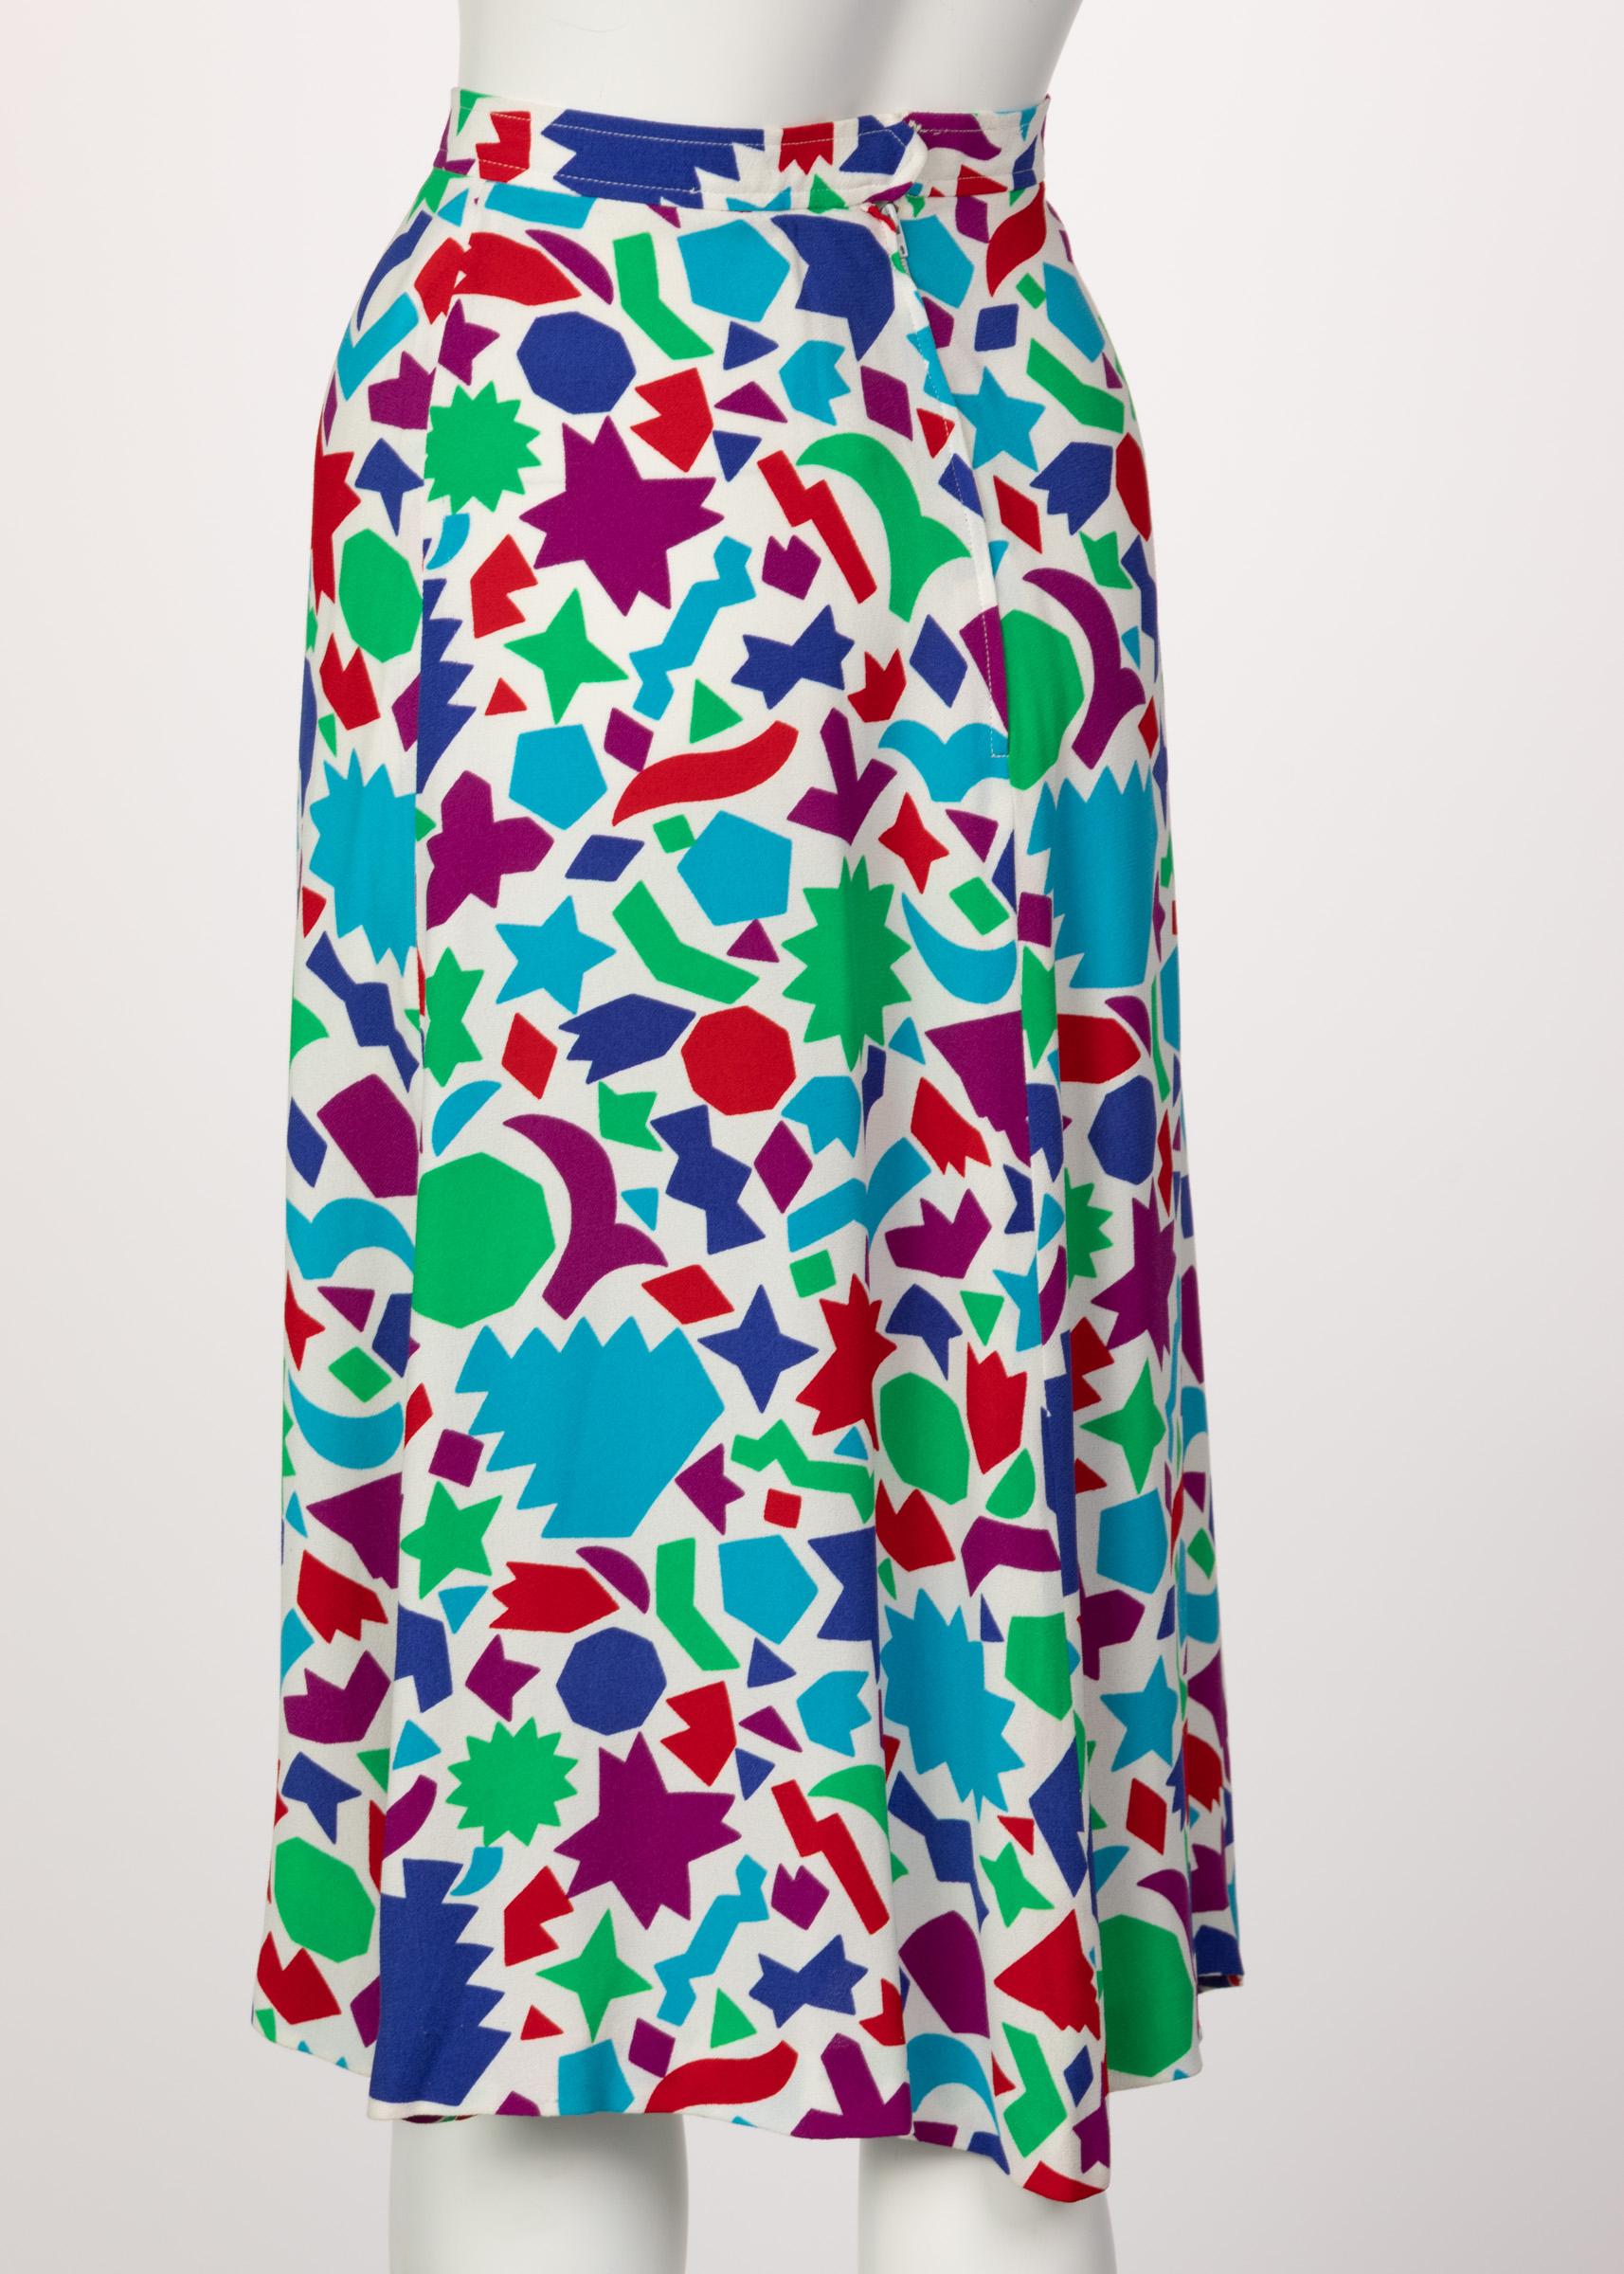 Vintage Yves Saint Laurent Matisse Inspired Skirt YSL In Excellent Condition For Sale In Boca Raton, FL